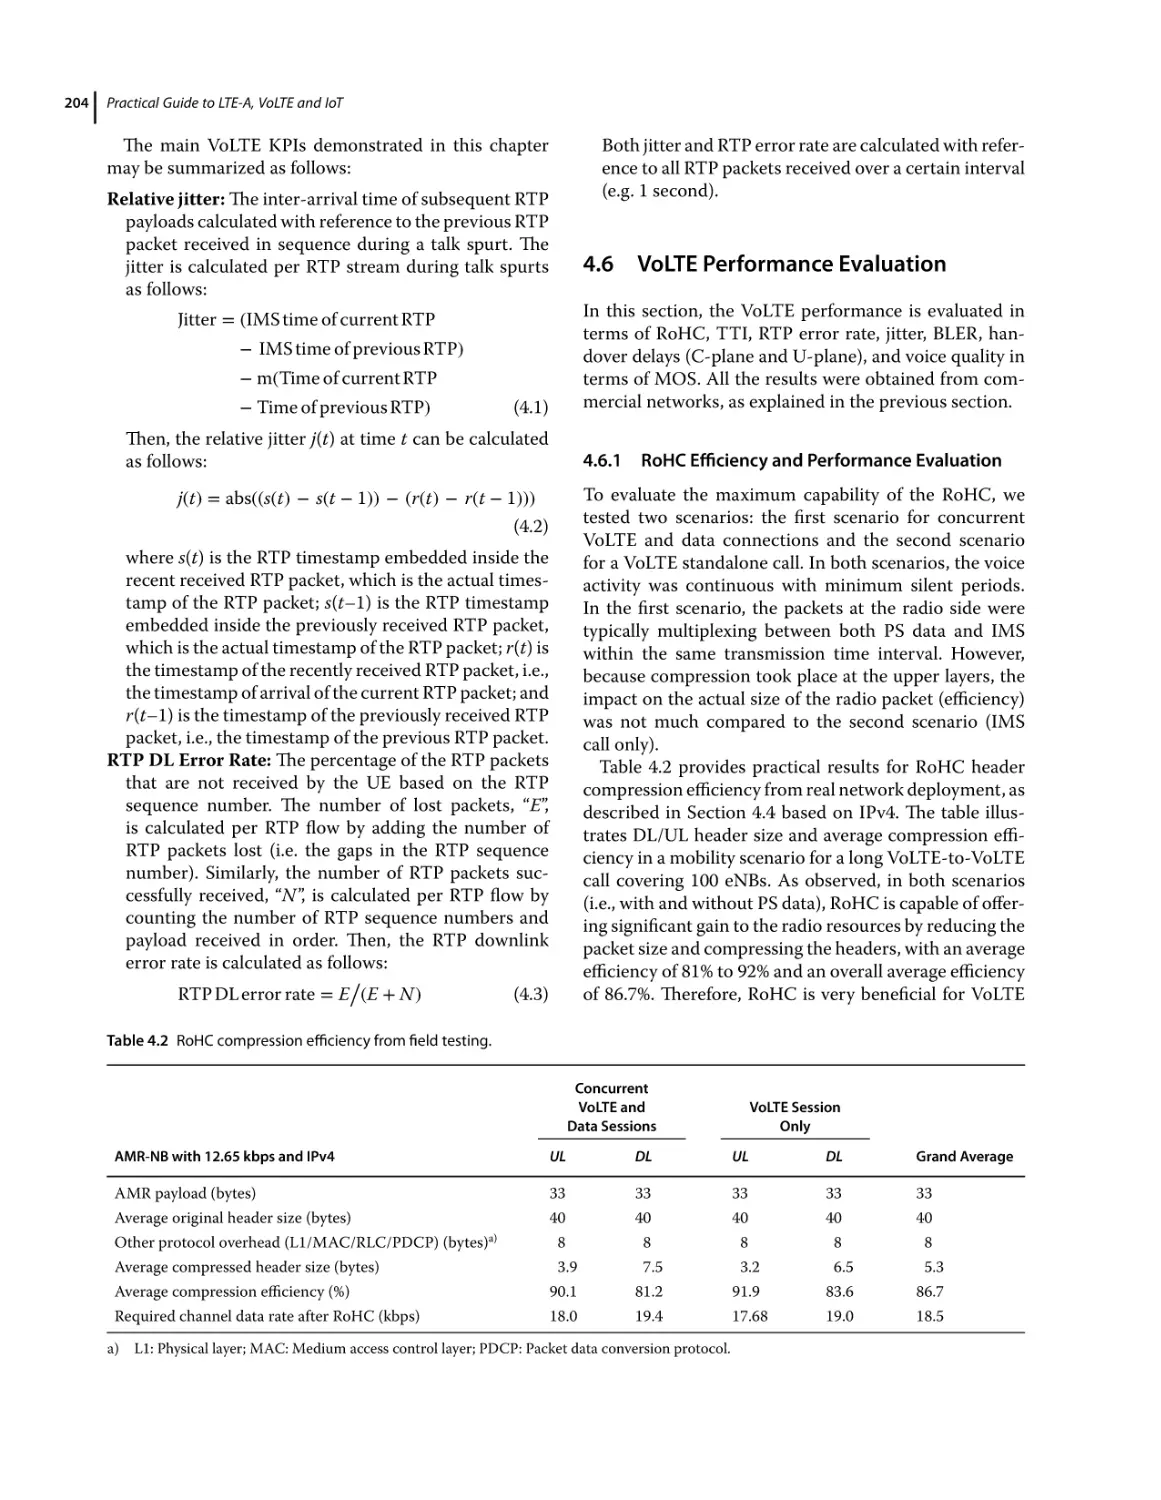 4.6 VoLTE Performance Evaluation
4.6.1 RoHC Efficiency and Performance Evaluation